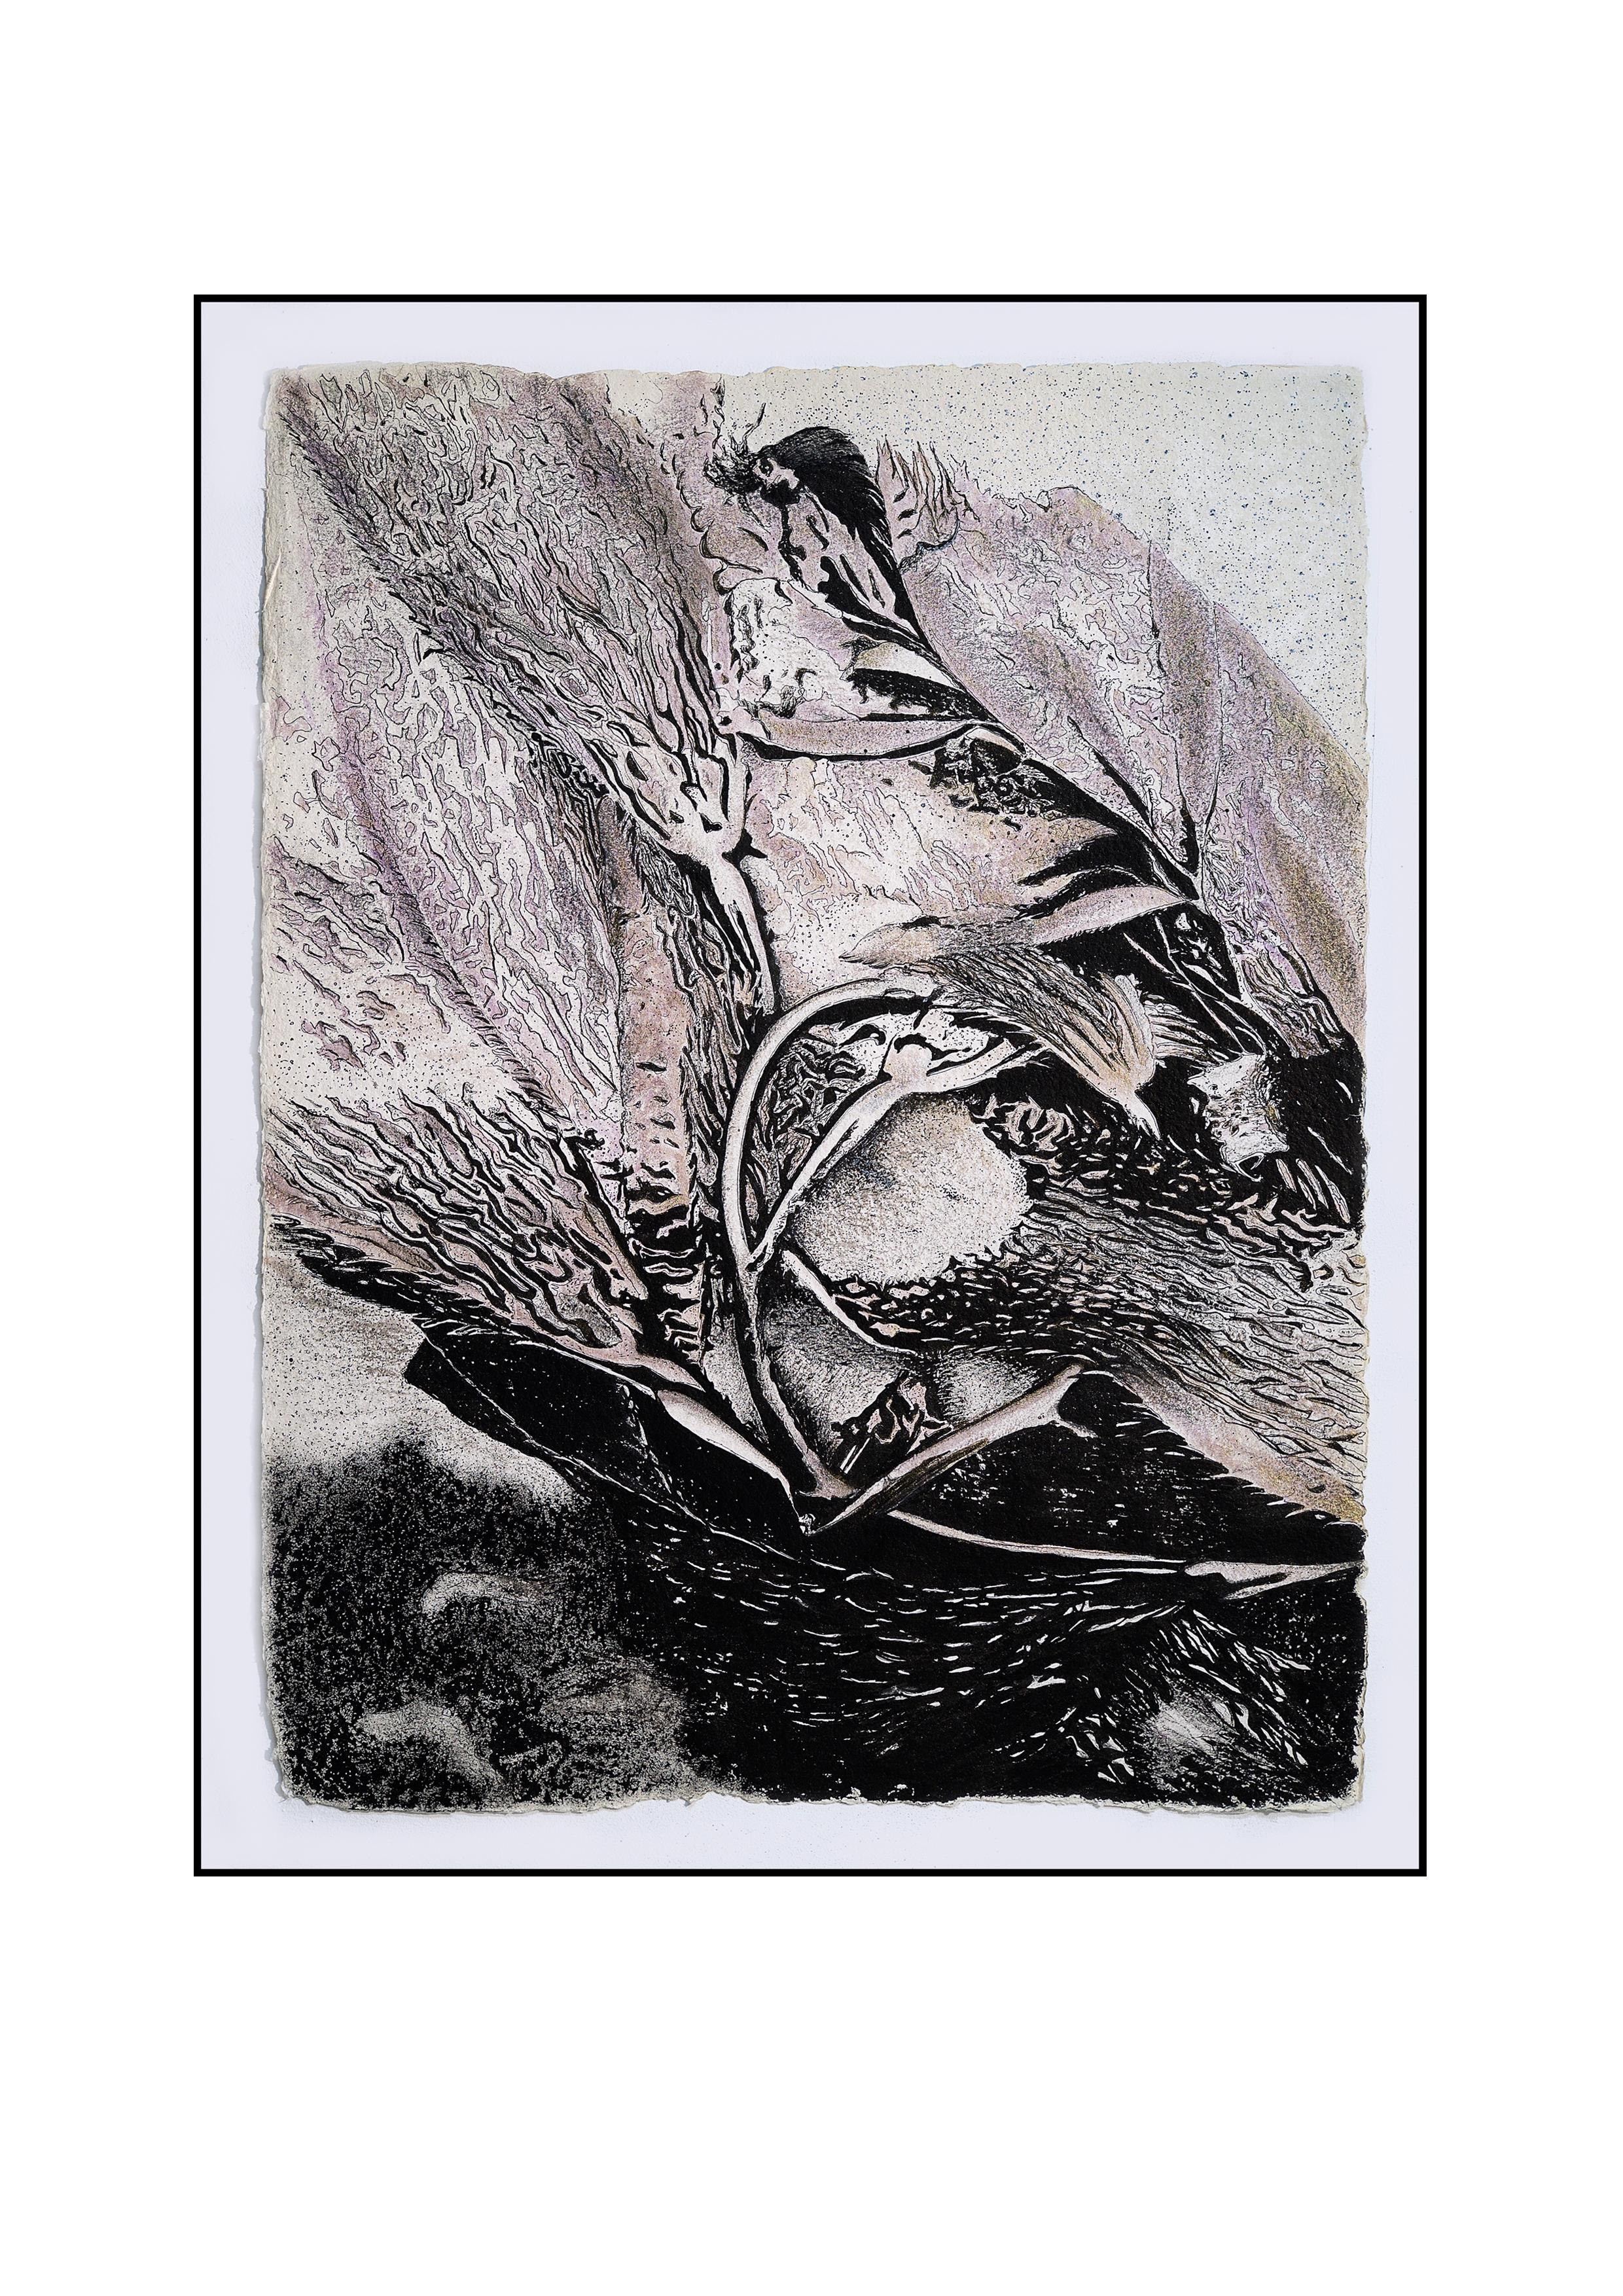 Frédéric Choisel Abstract Painting - Alga Aligata No. 3- seaweed kelp oceanic abstracted work on paper